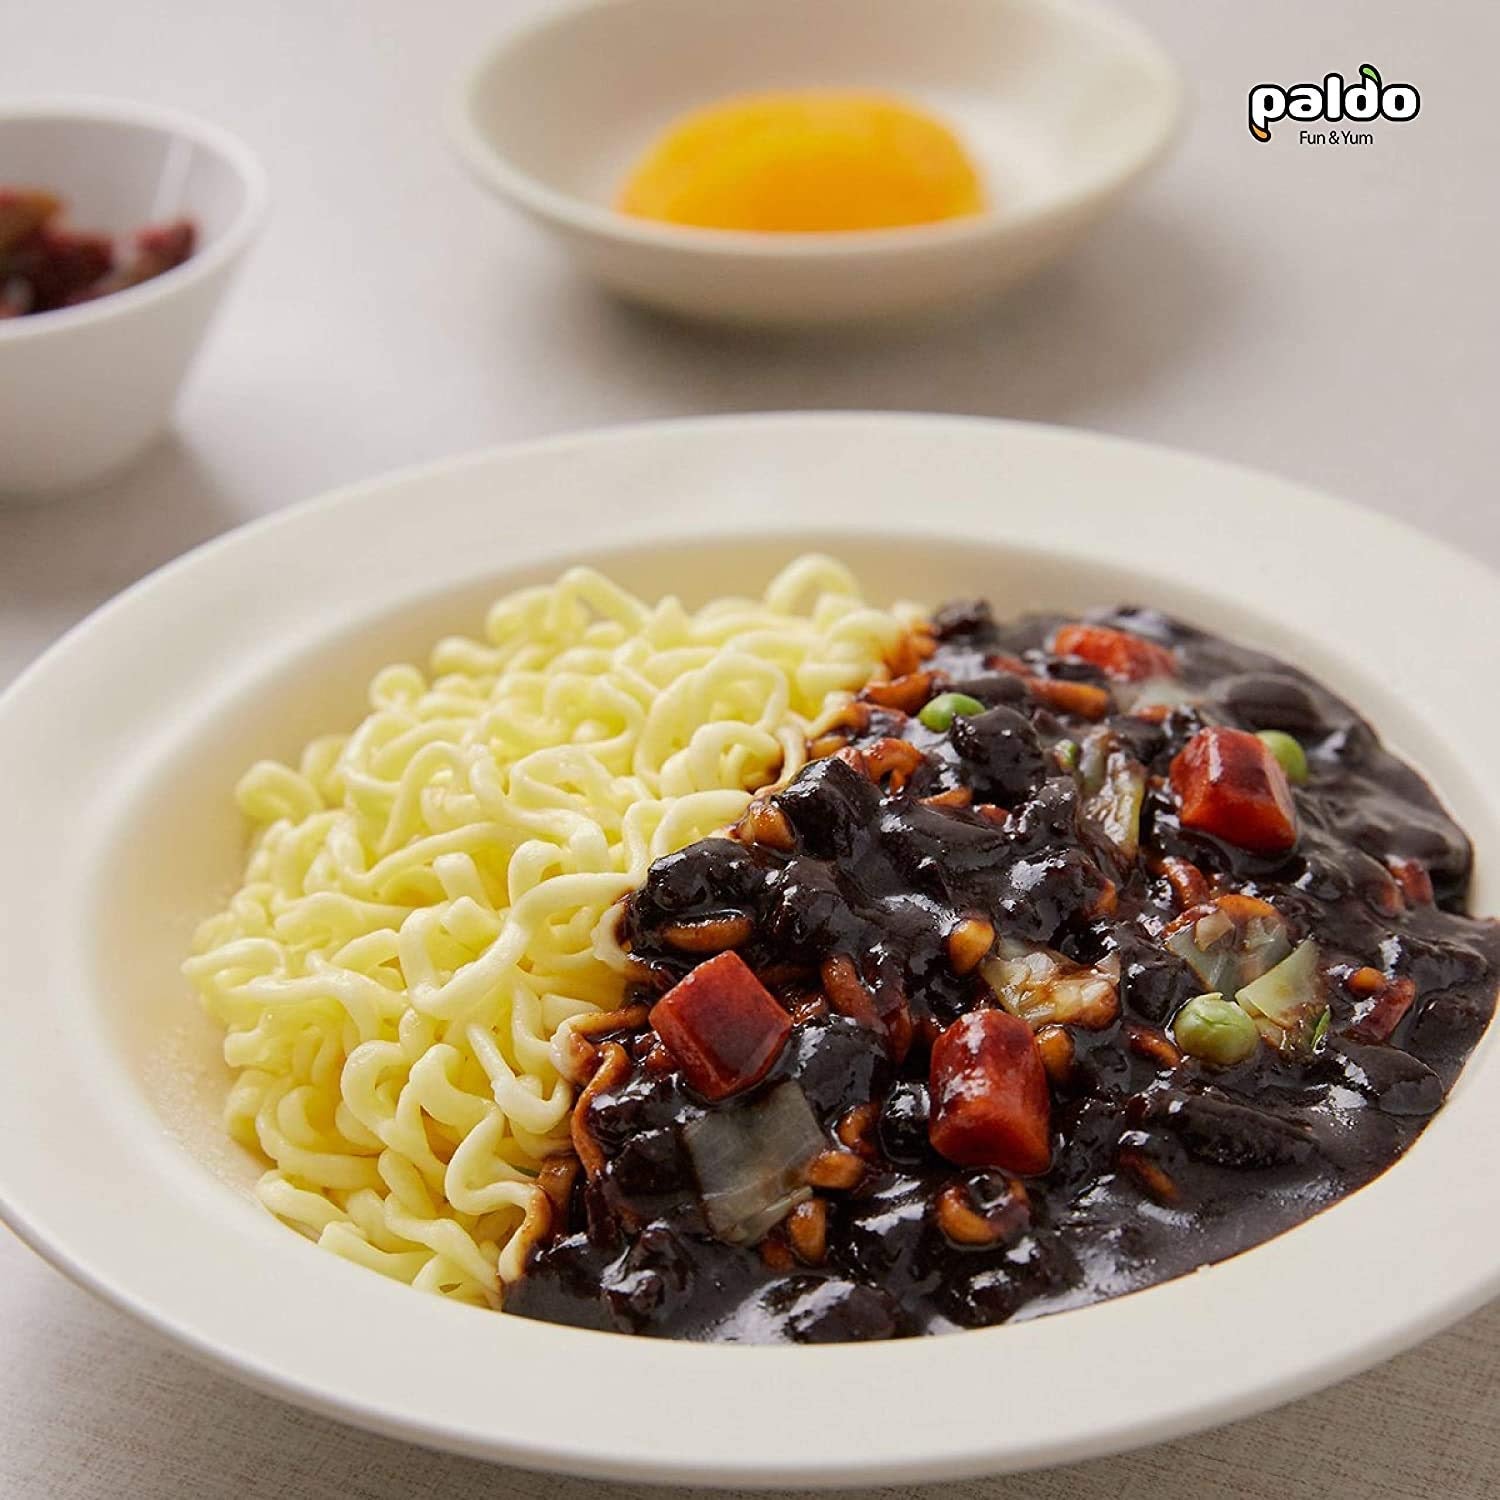 Paldo Jjajangmen Chajang Noodle with Black Sauce (4 pack) - 800g/28.2oz